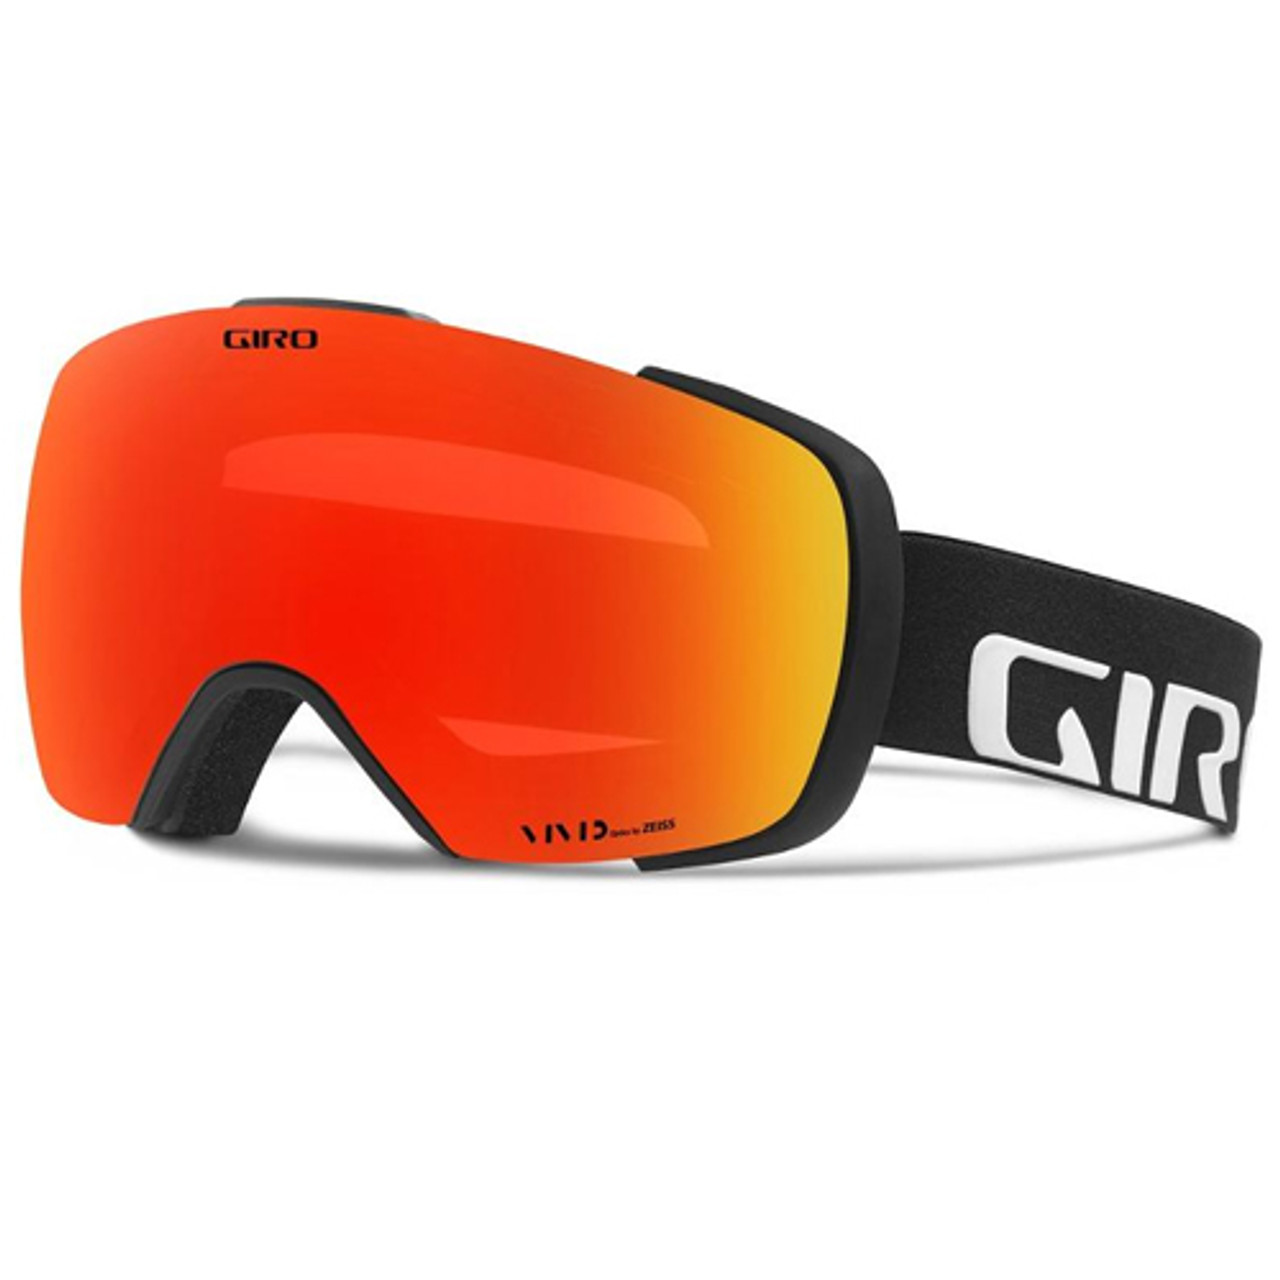 Giro Contact Goggle Replacement Lenses - PROLENS